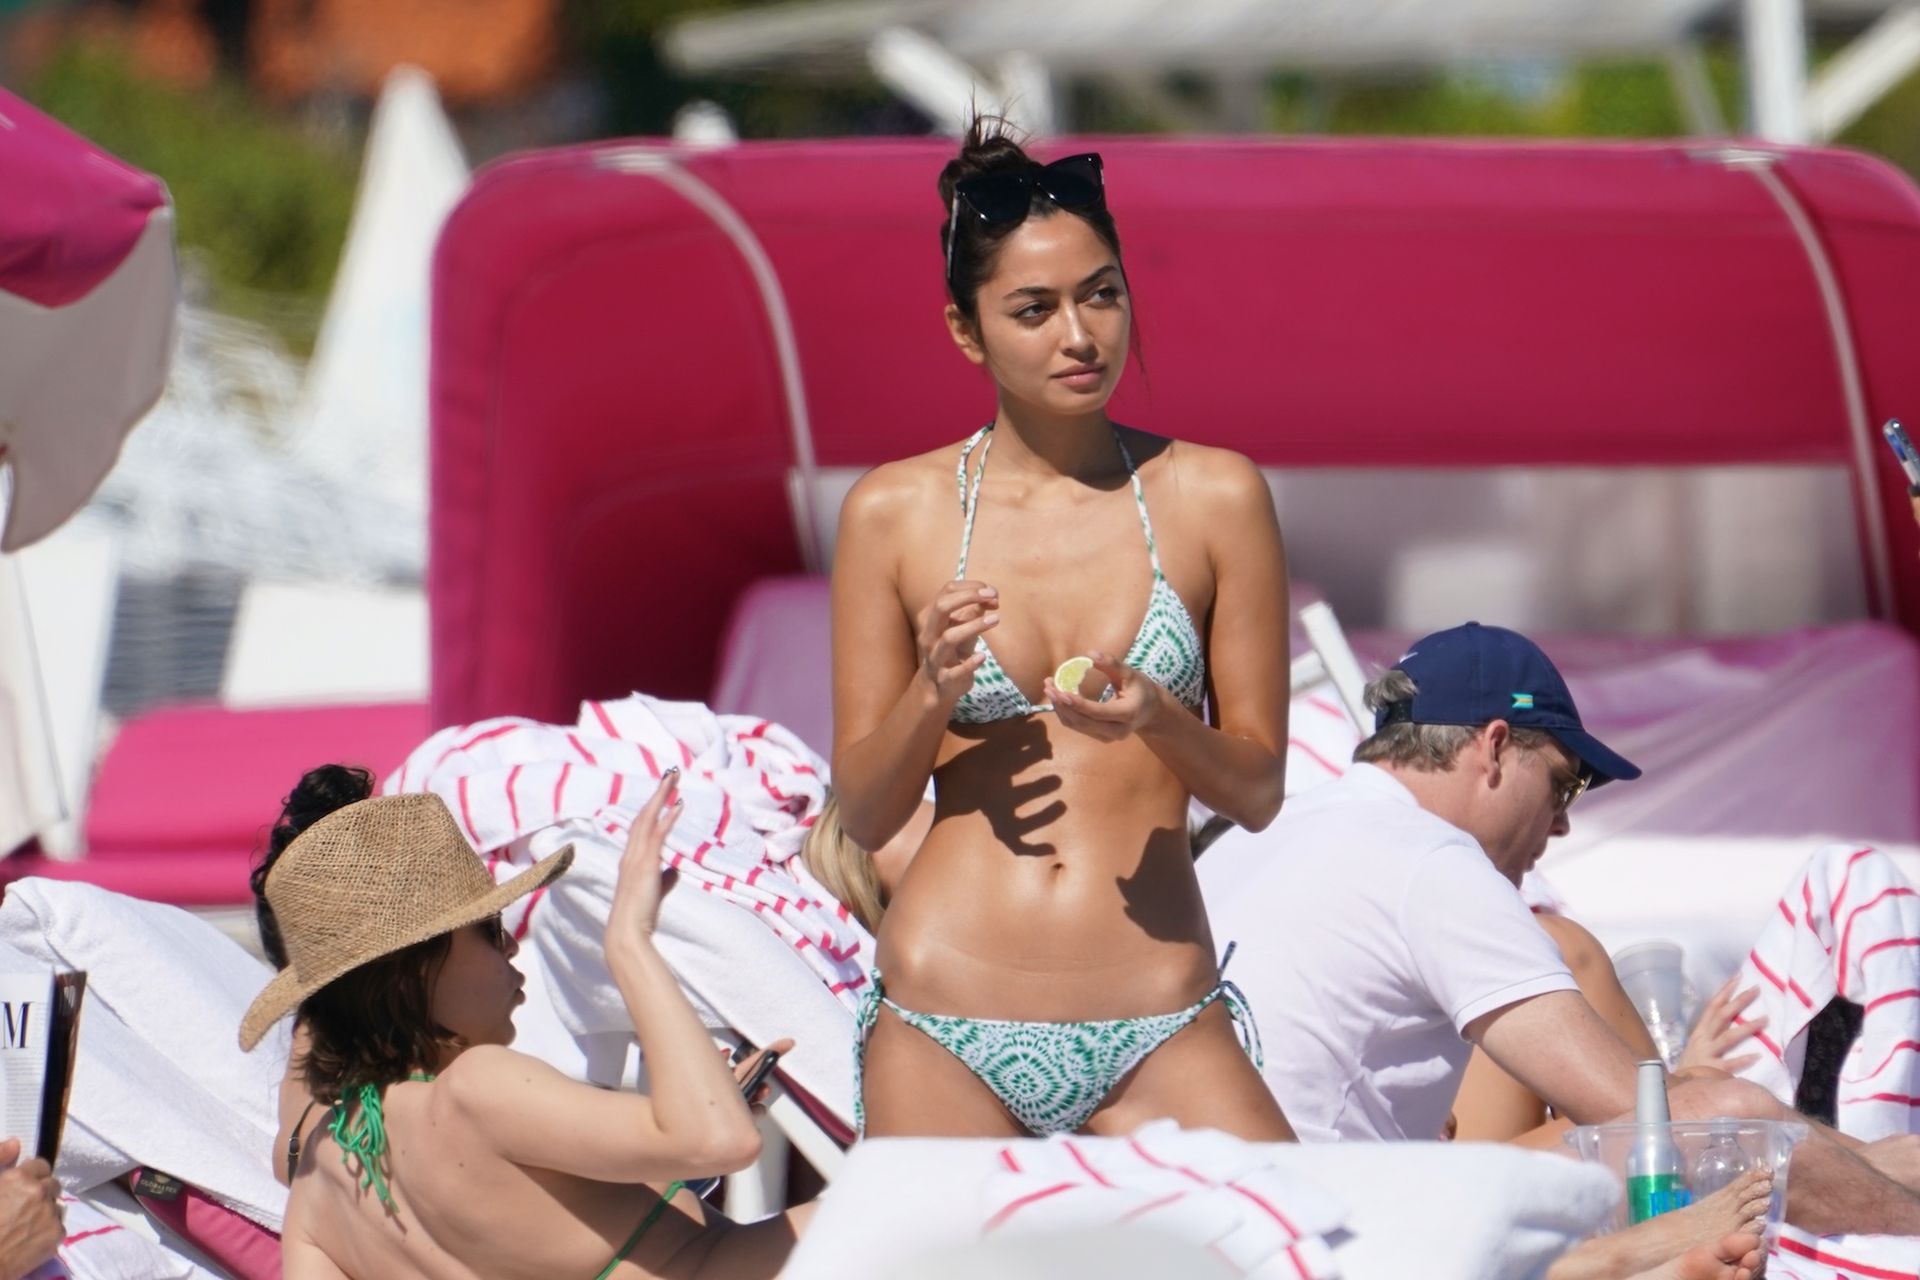 Ambra Gutierrez Hits The Beach In Miami Wearing A Tiny Bikini 0018